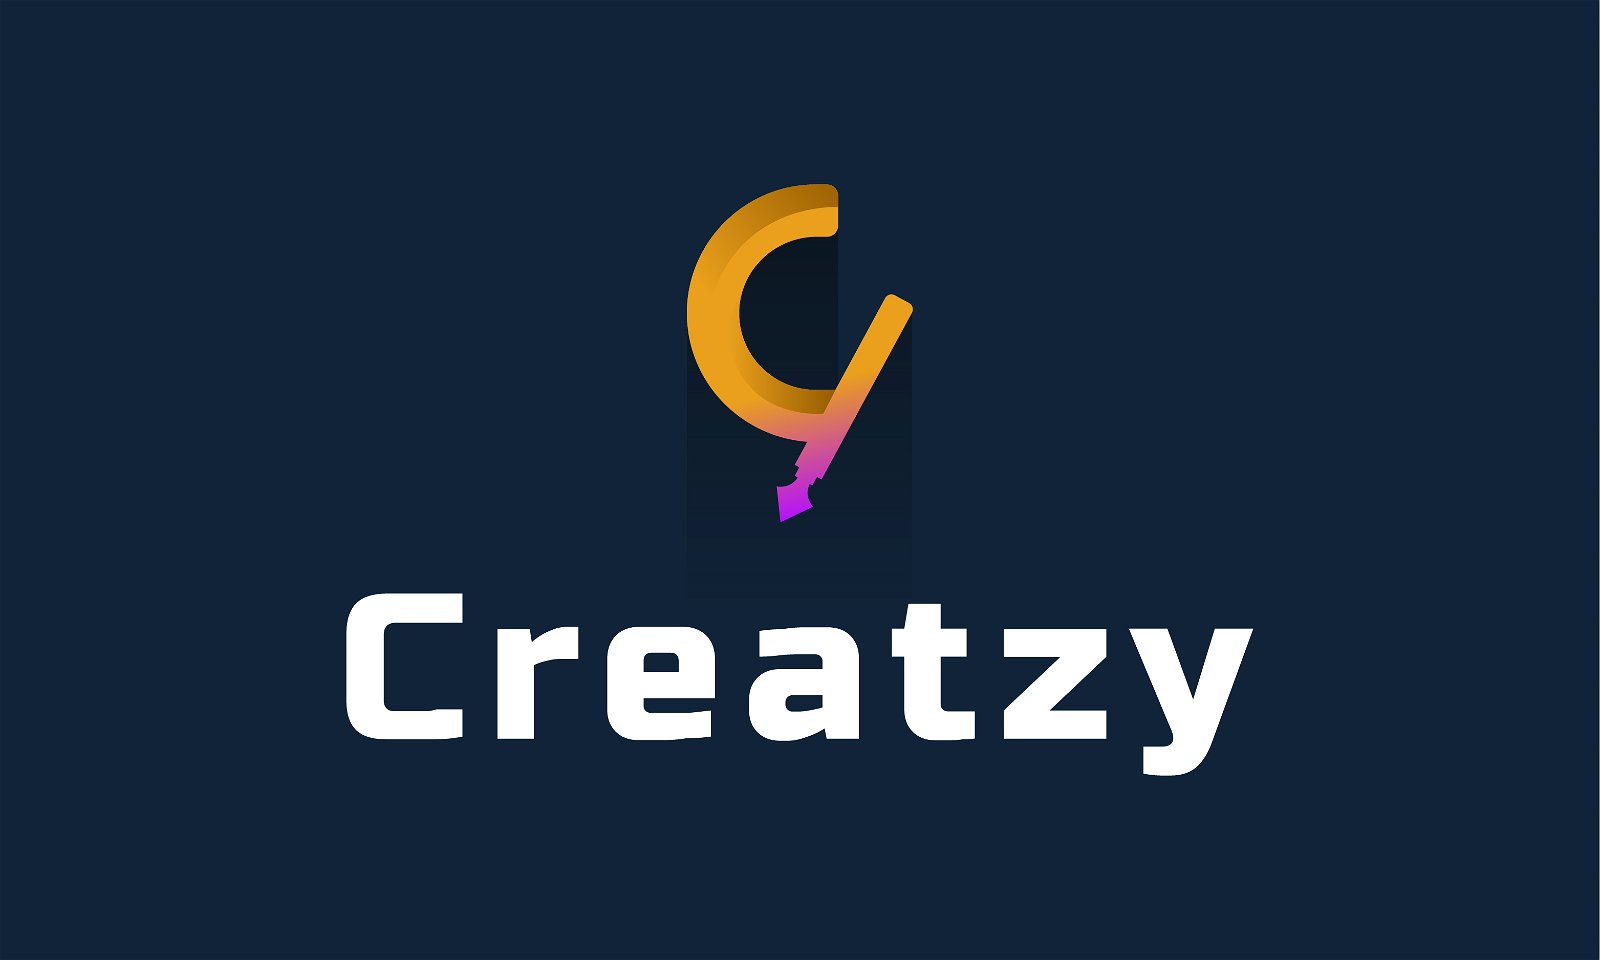 Creatzy.com - Creative brandable domain for sale